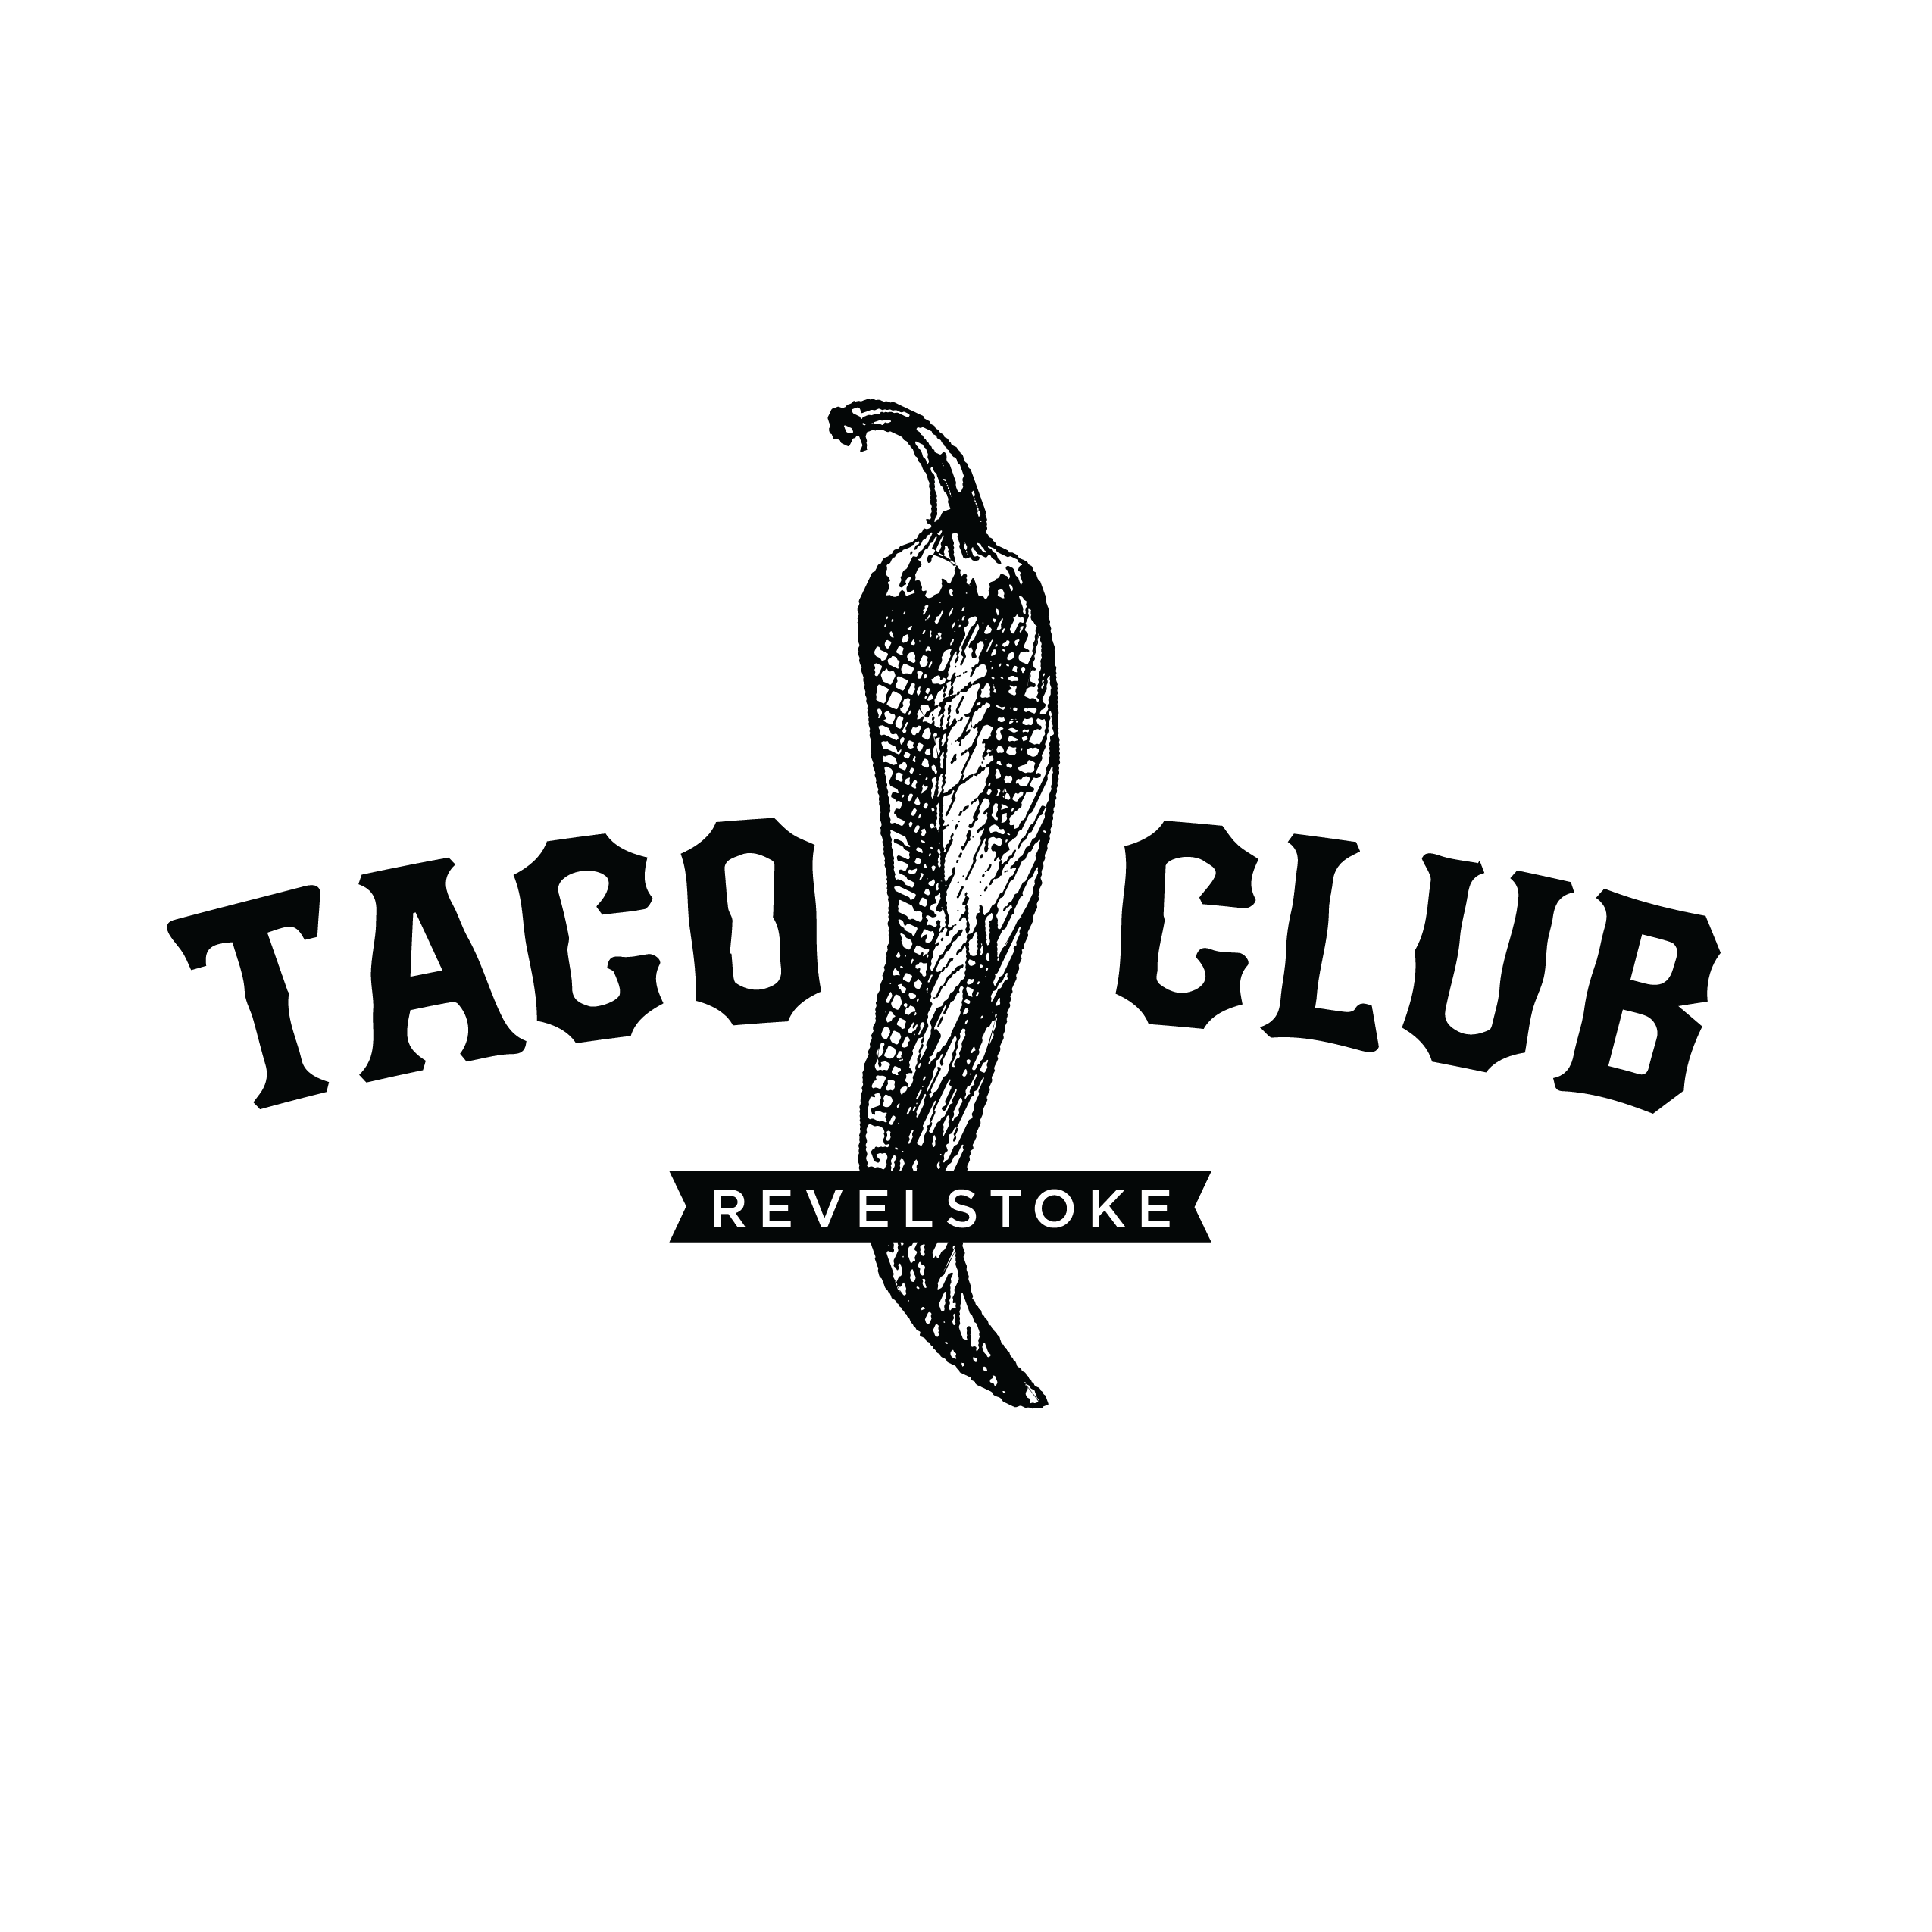 The Taco Club Revelstoke